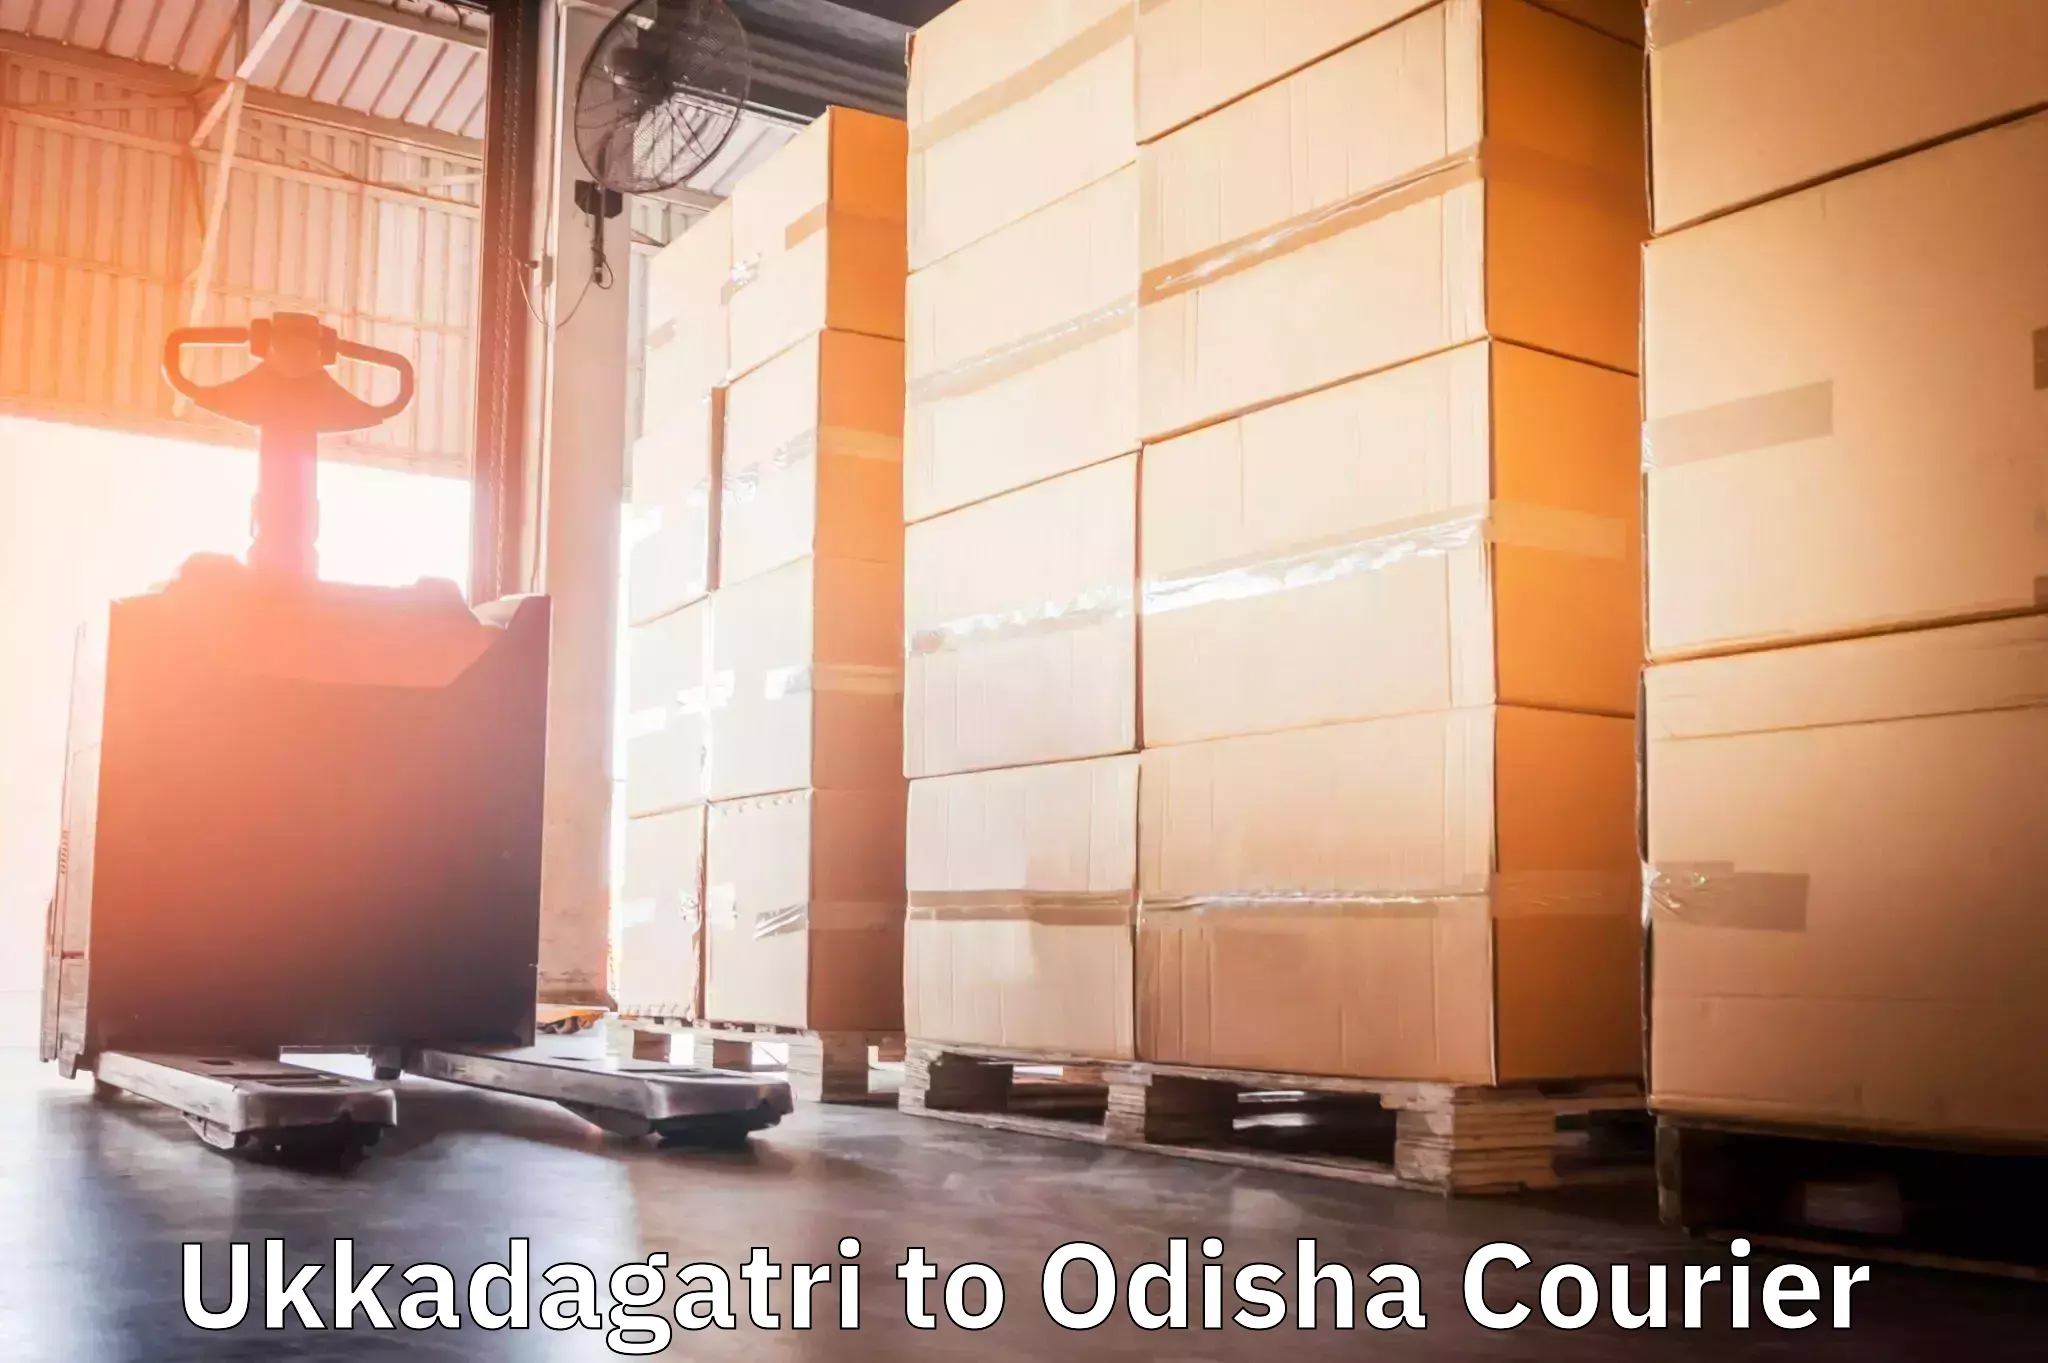 Courier membership Ukkadagatri to Odisha